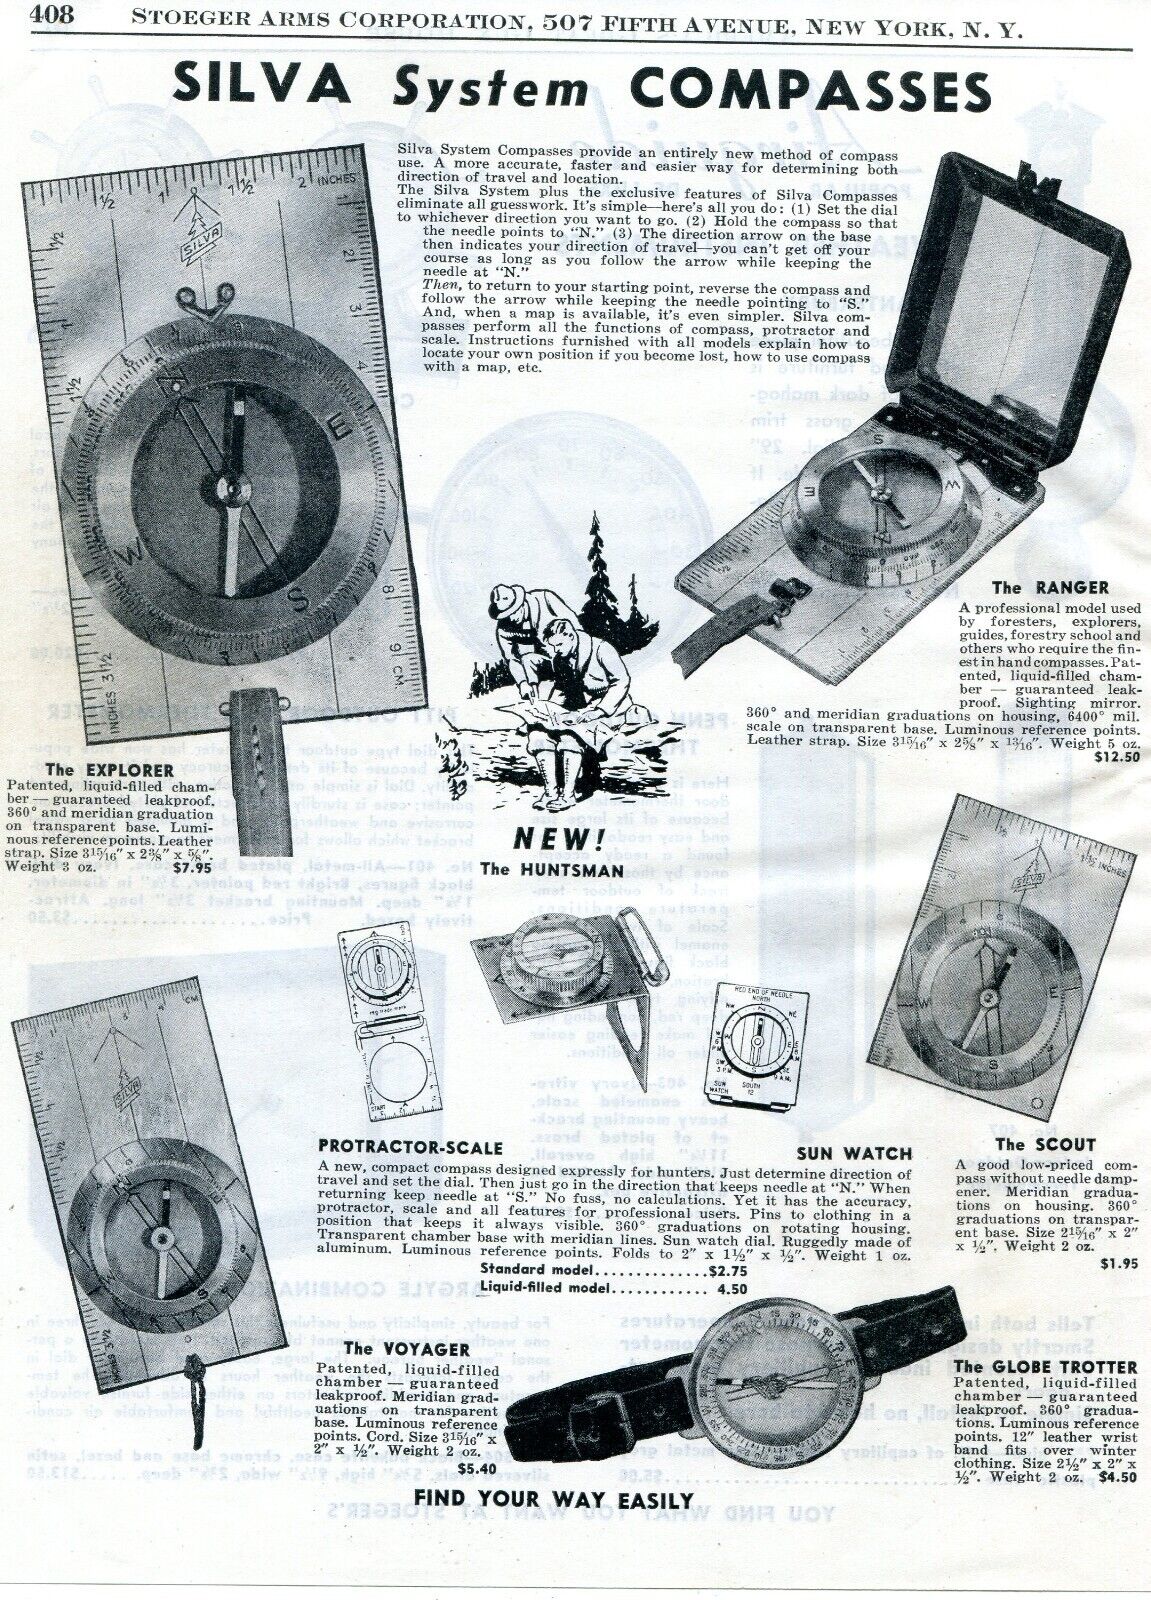 1951 Print Ad of Silva Compass Explorer, Ranger, Huntsman, Scout, Globe Trotter